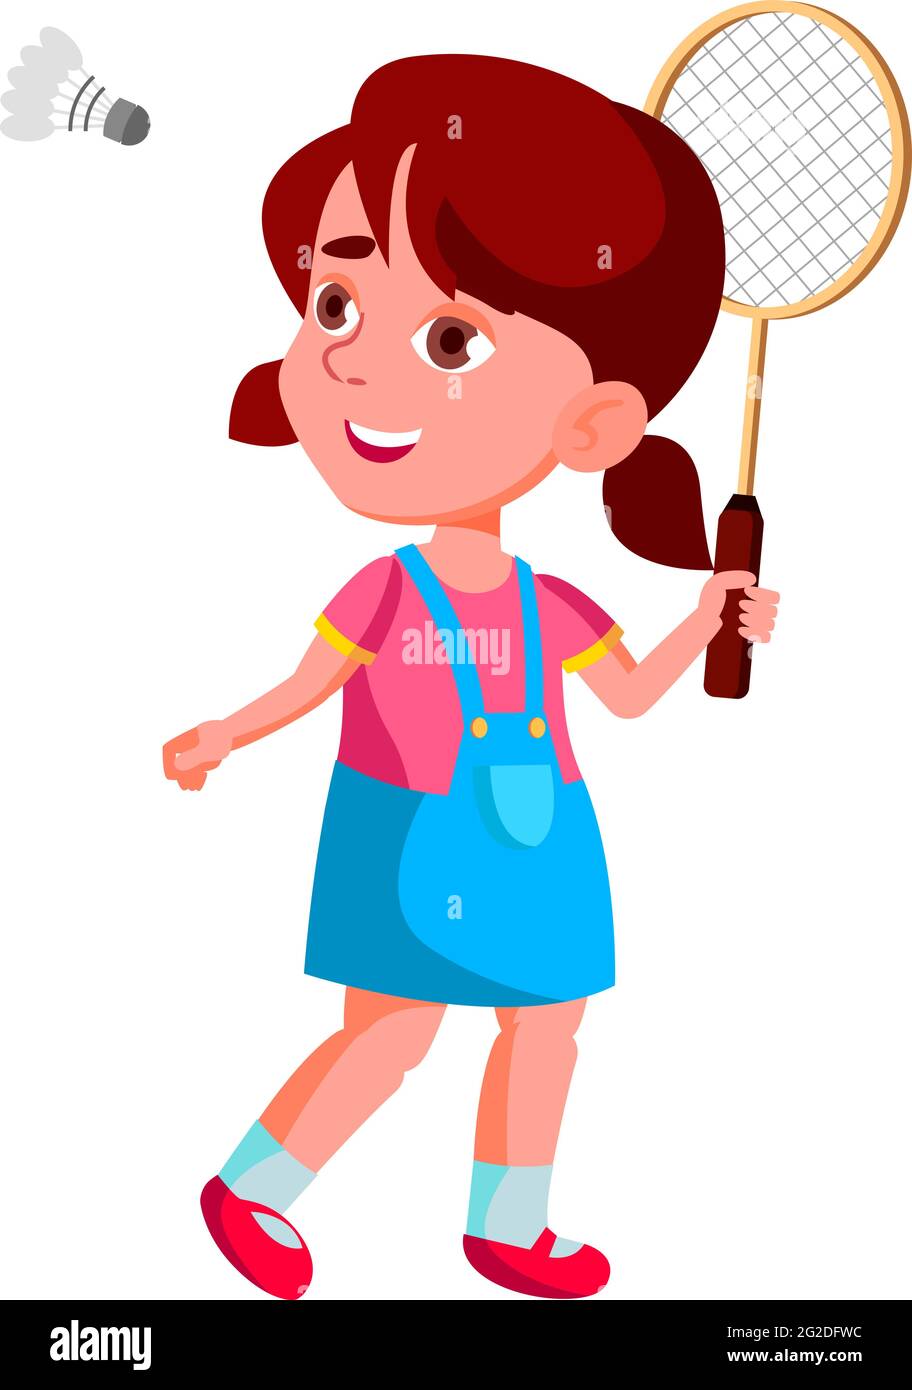 playful cute girl playing badminton game with shuttlecock cartoon vector  Stock Vector Image & Art - Alamy